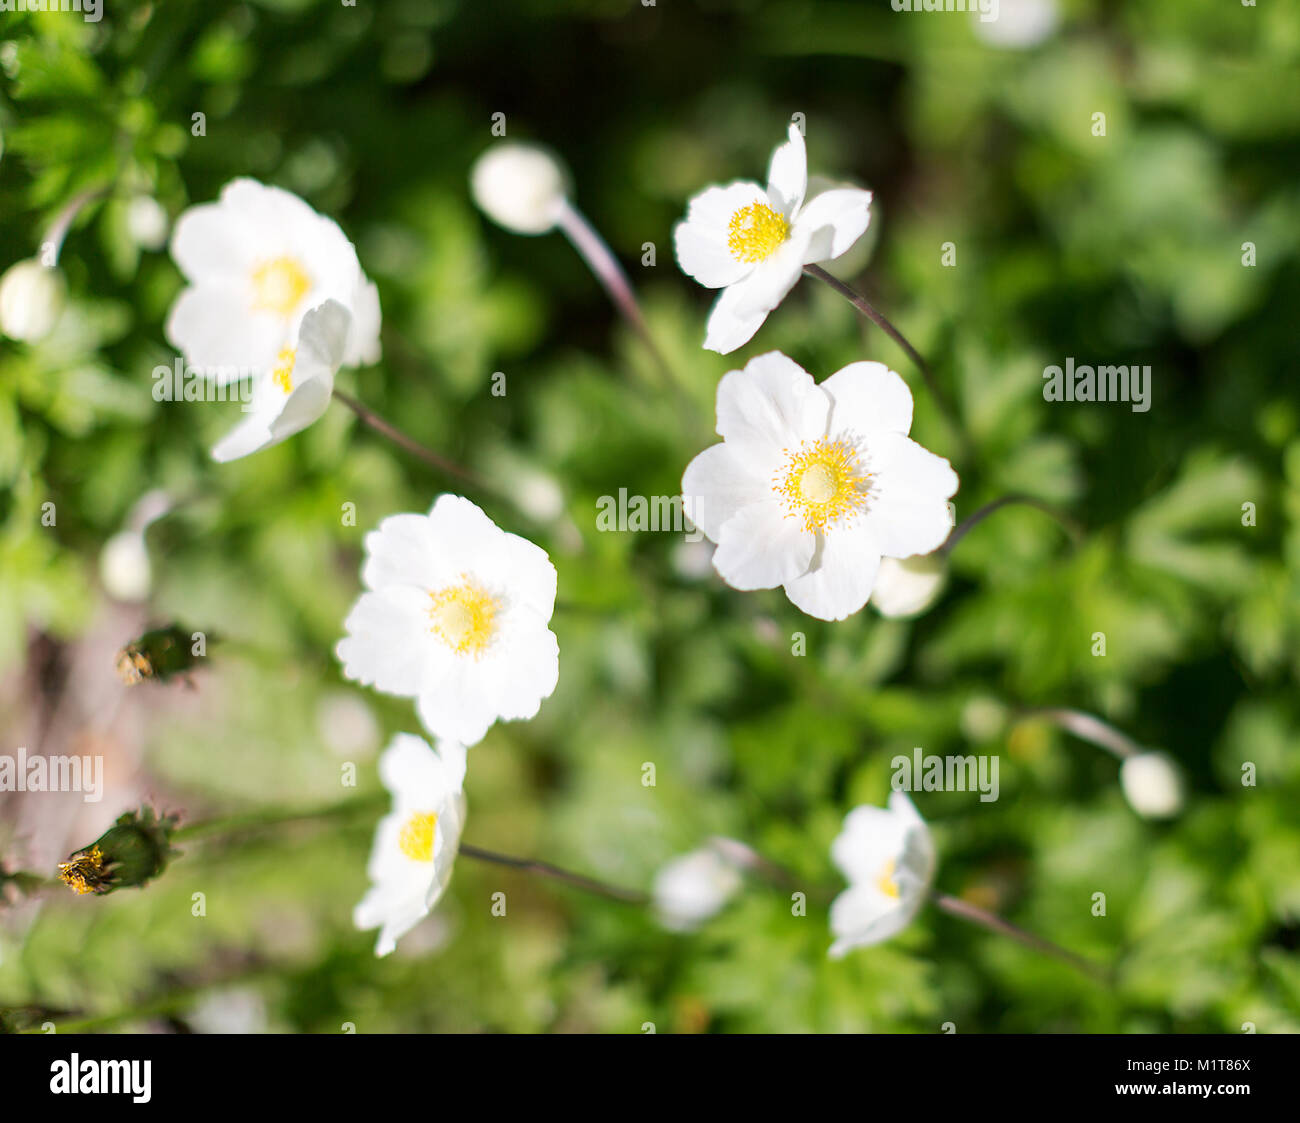 Flowering white Anemone hupehensis. Thimbleweed or windflower, Ranunculaceae family. Selective focus Stock Photo